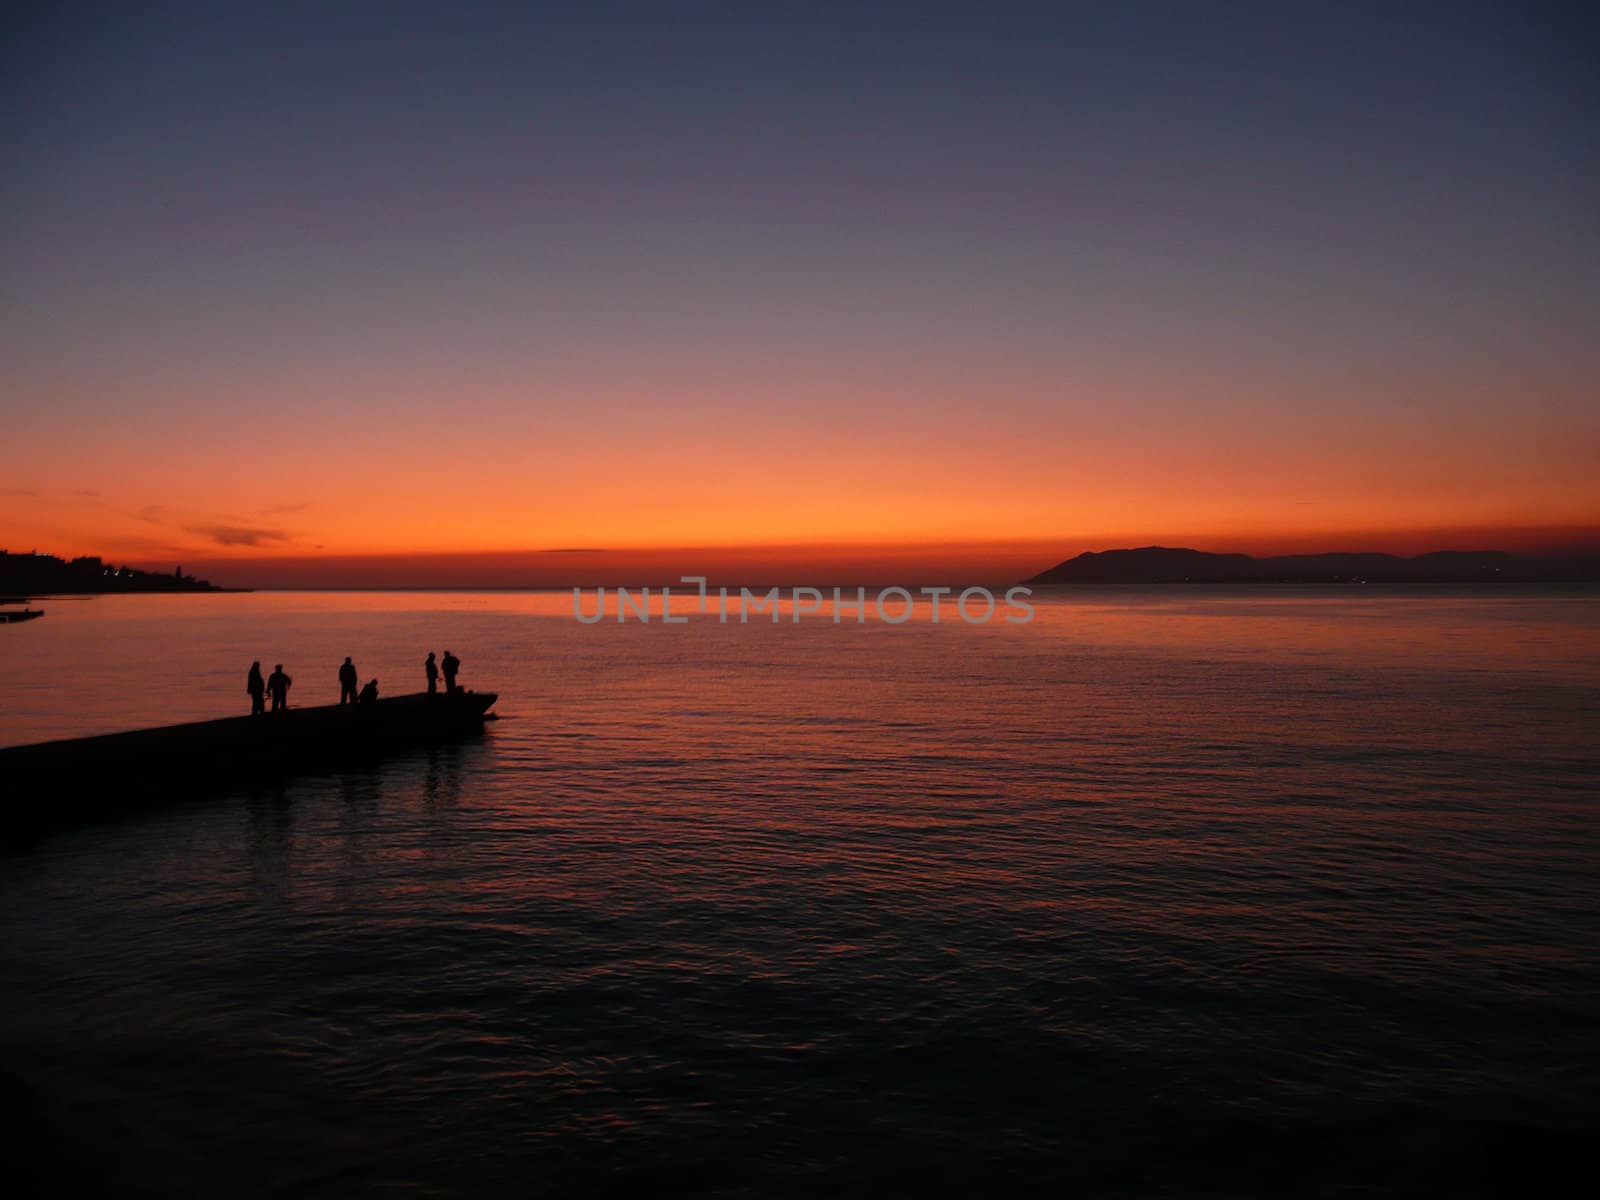 fishermans in sunset